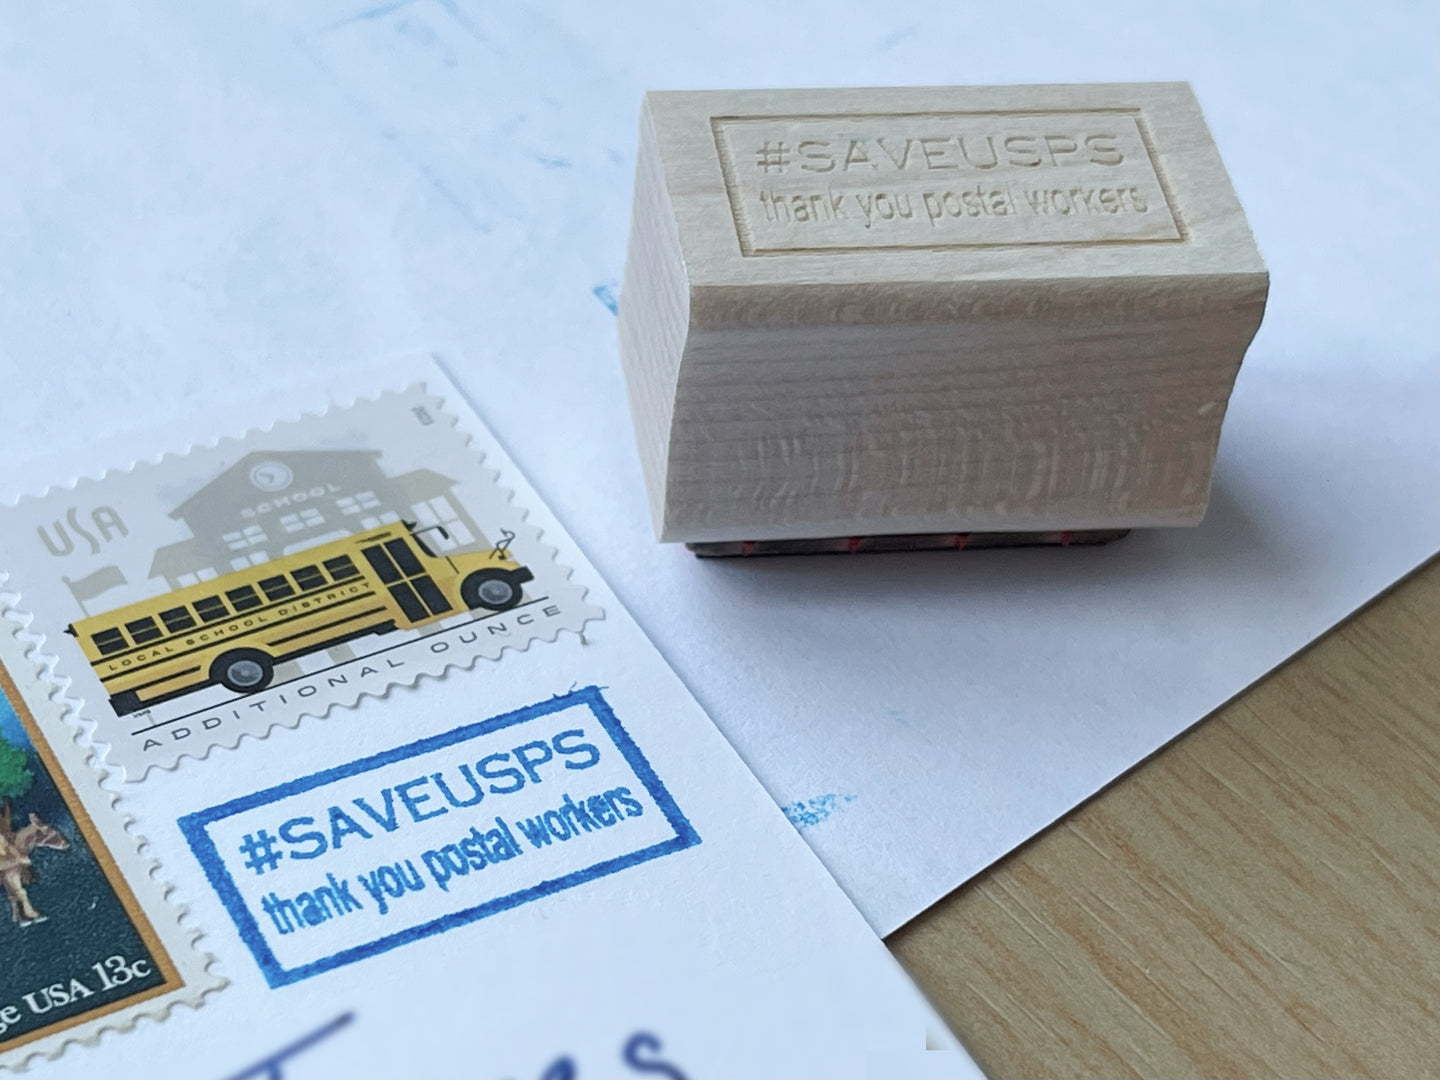 #SAVEUSPS Rubber Stamp